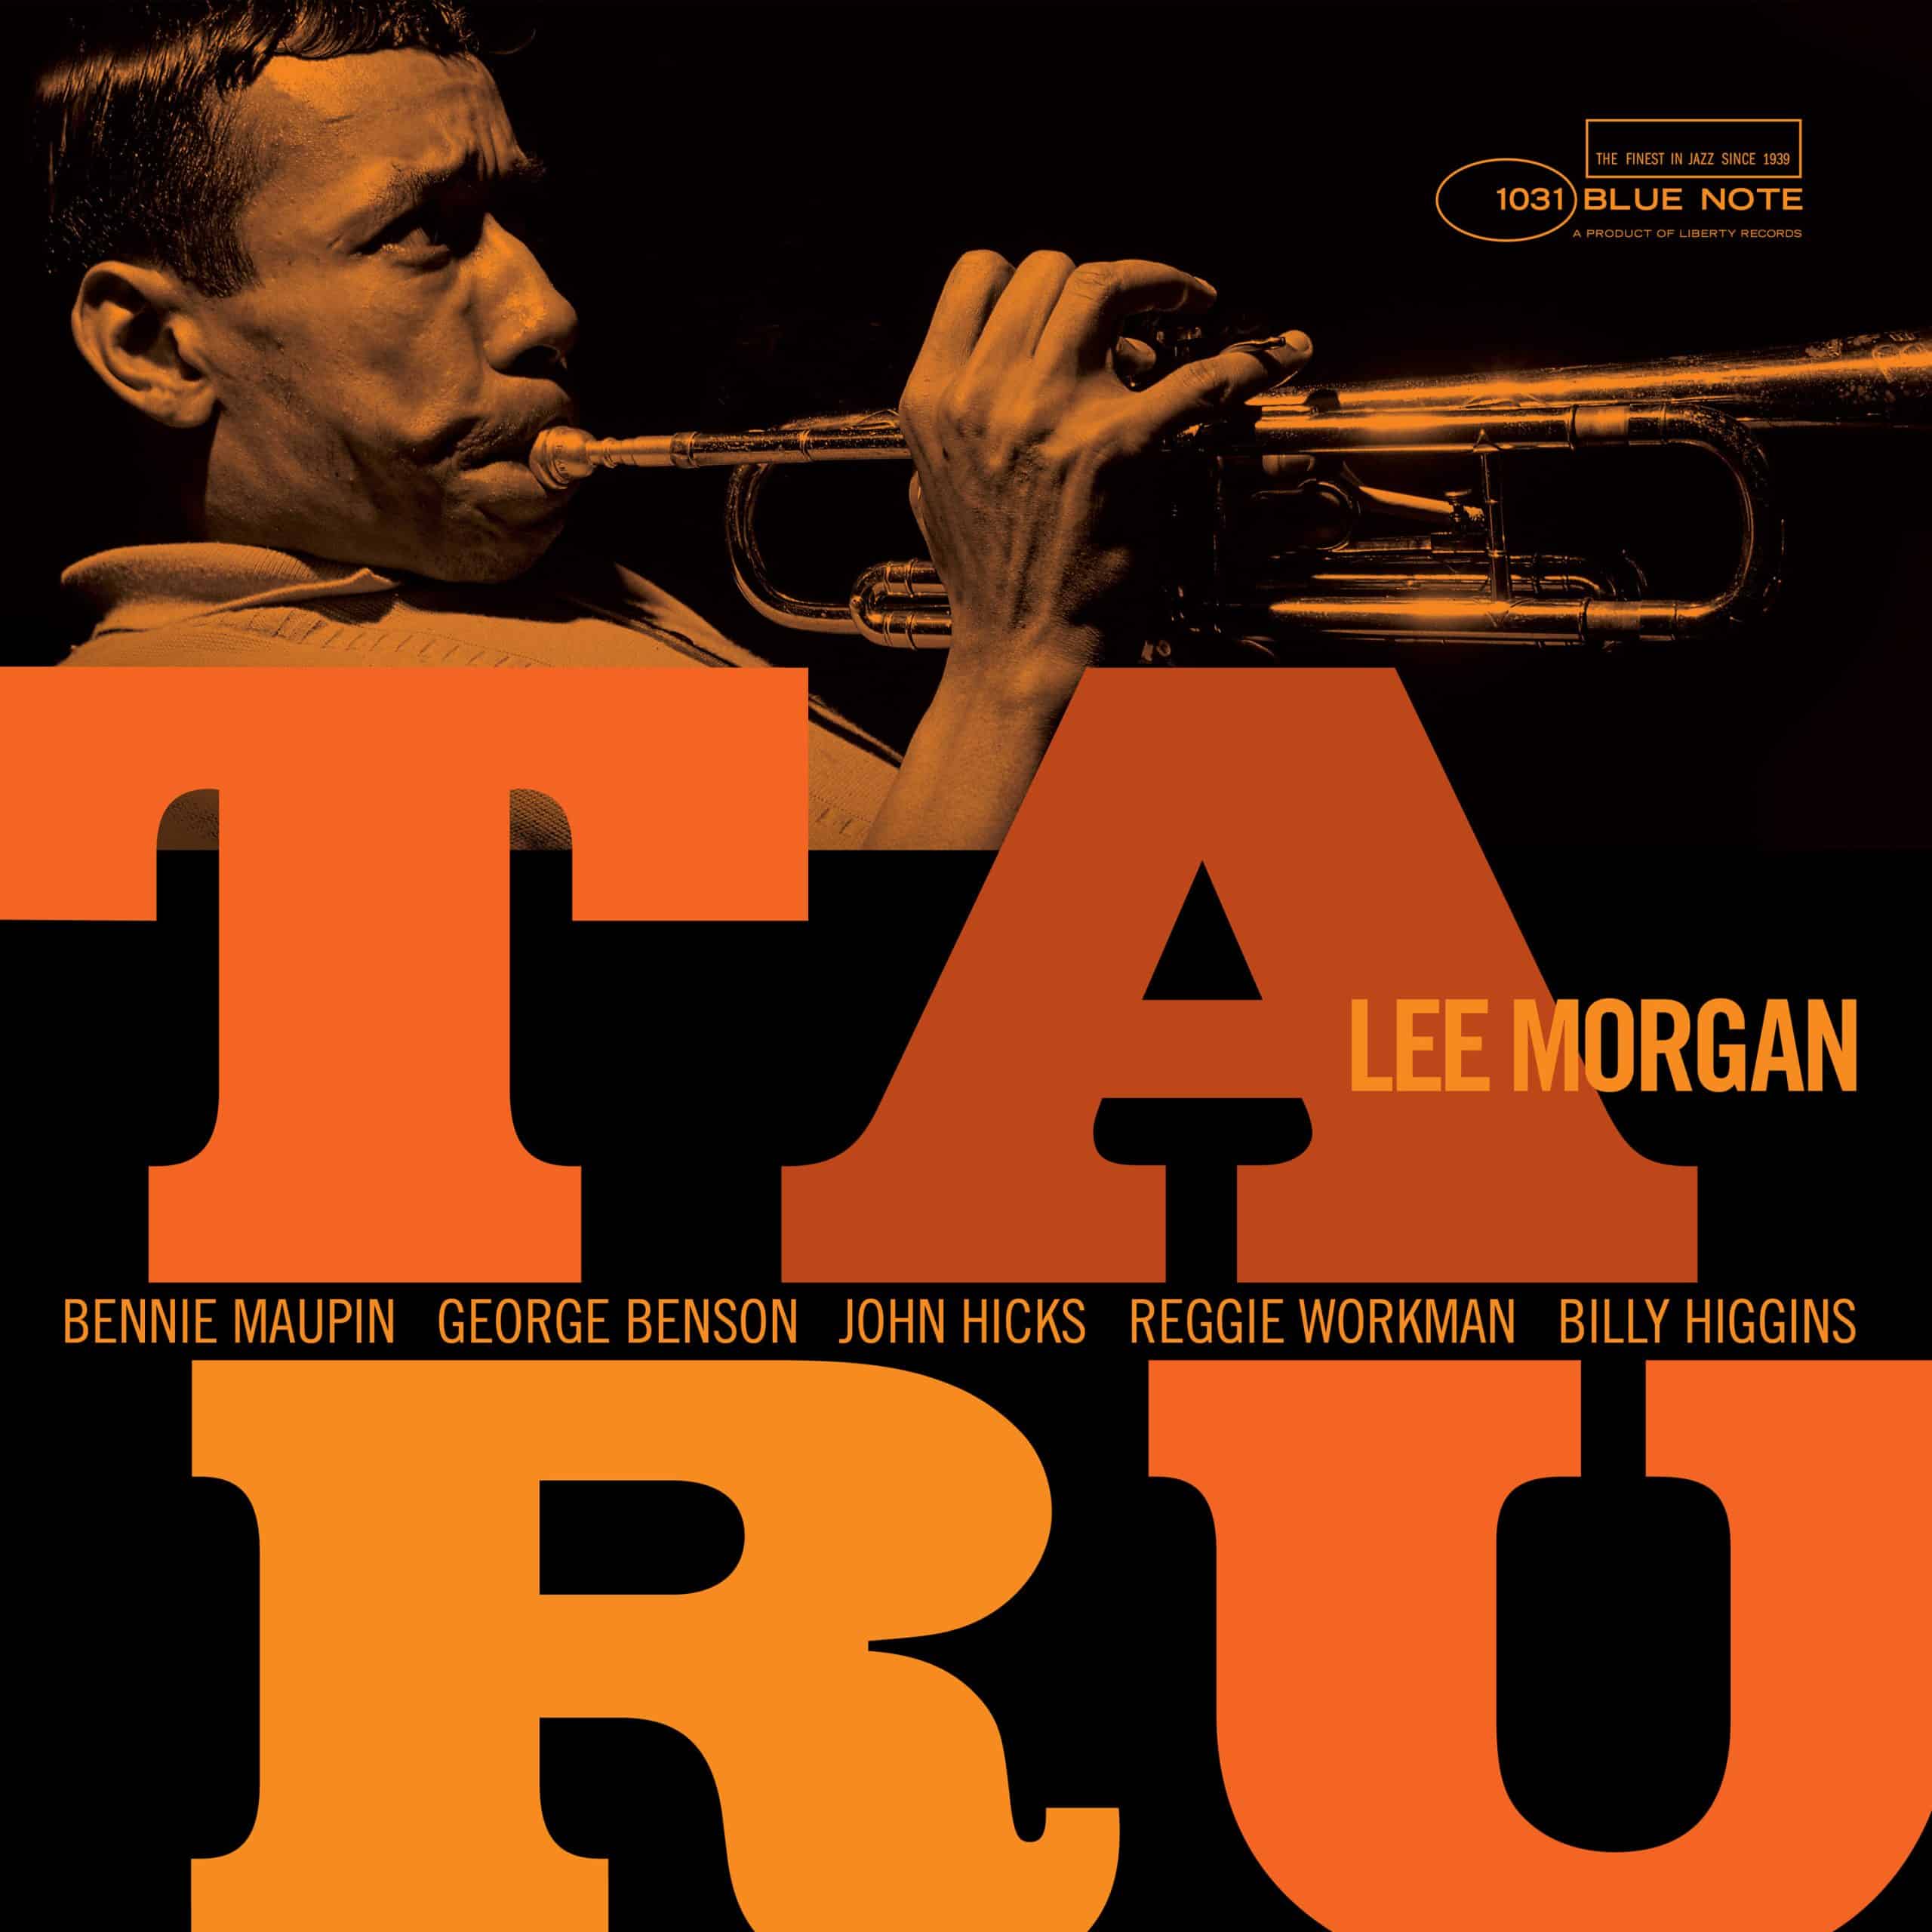 Lee Morgan – Taru (Tone Poet)